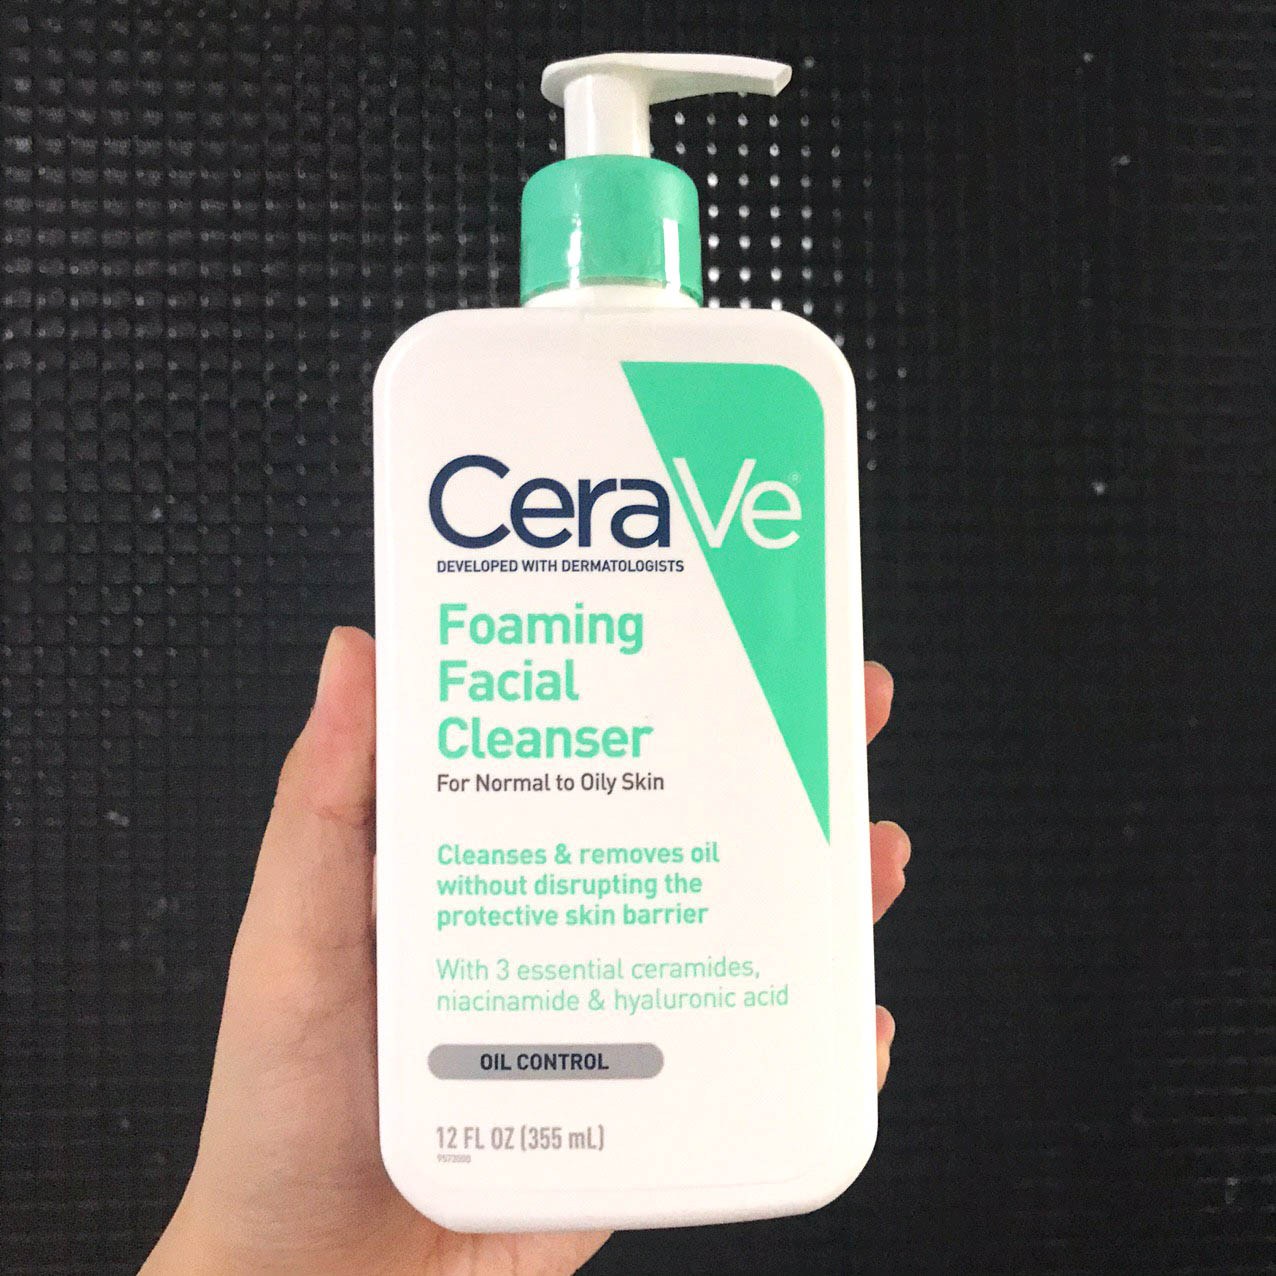 Cảm nhận sau khi sử dụng sữa rửa mặt CeraVe Foaming Facial Cleanser